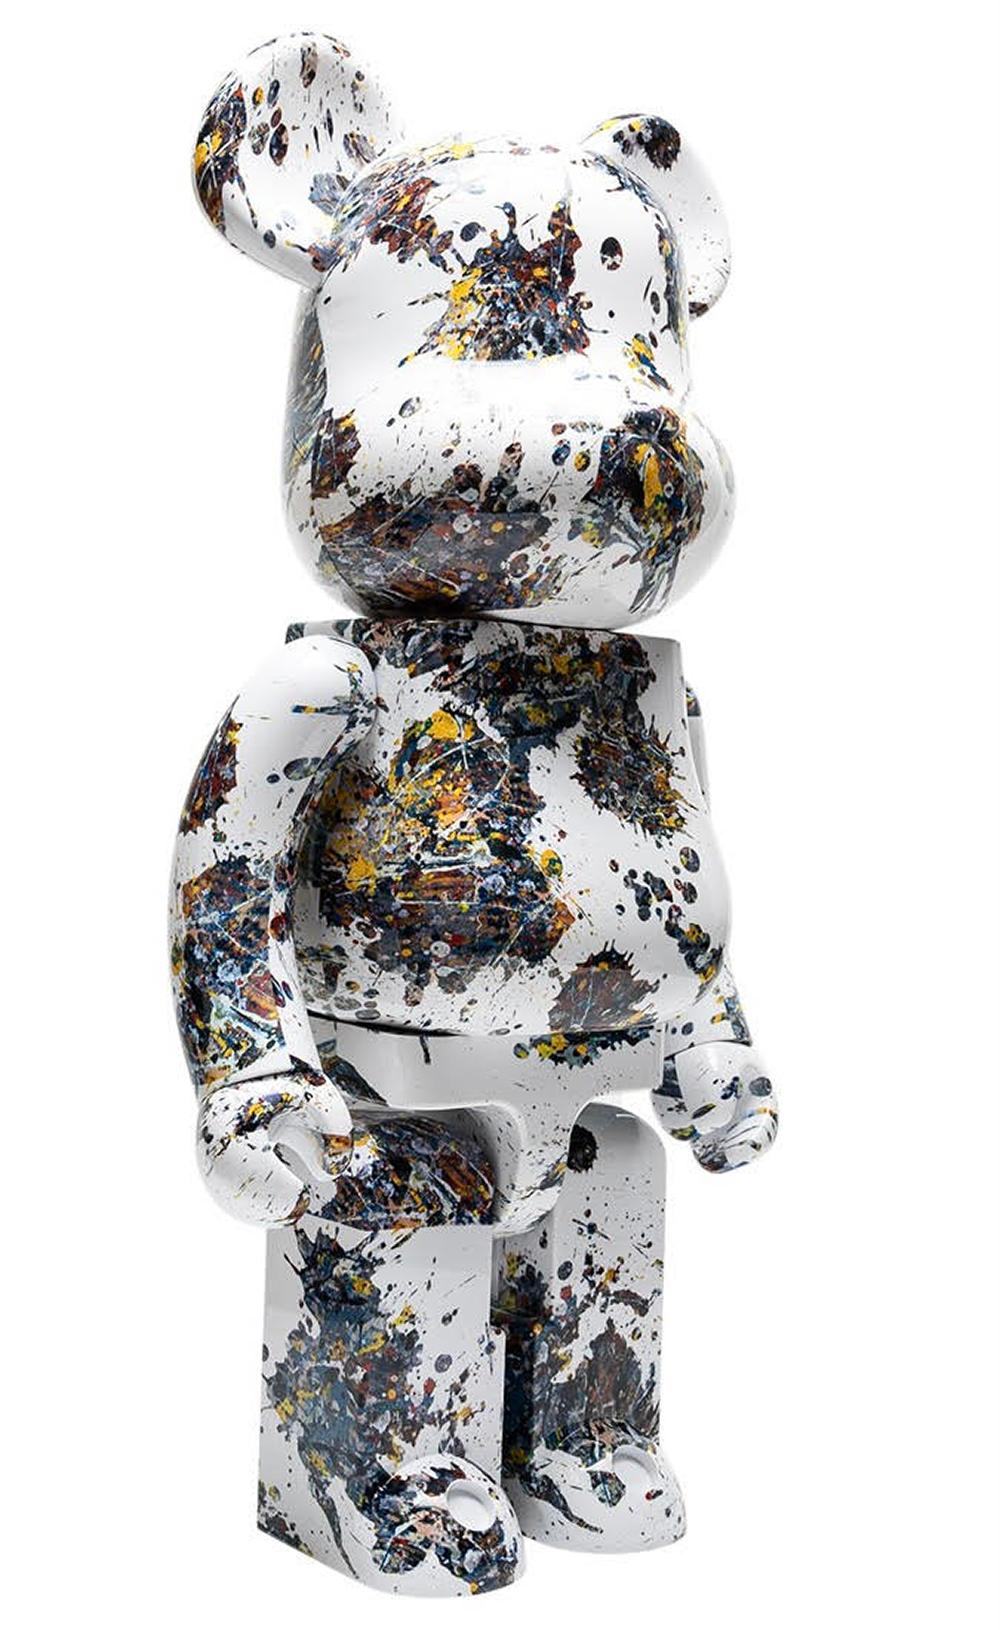 Jackson Pollock Bearbrick 1000% (Jackson Pollock BE@RBRICK) - Abstract Sculpture by (after) Jackson Pollock 